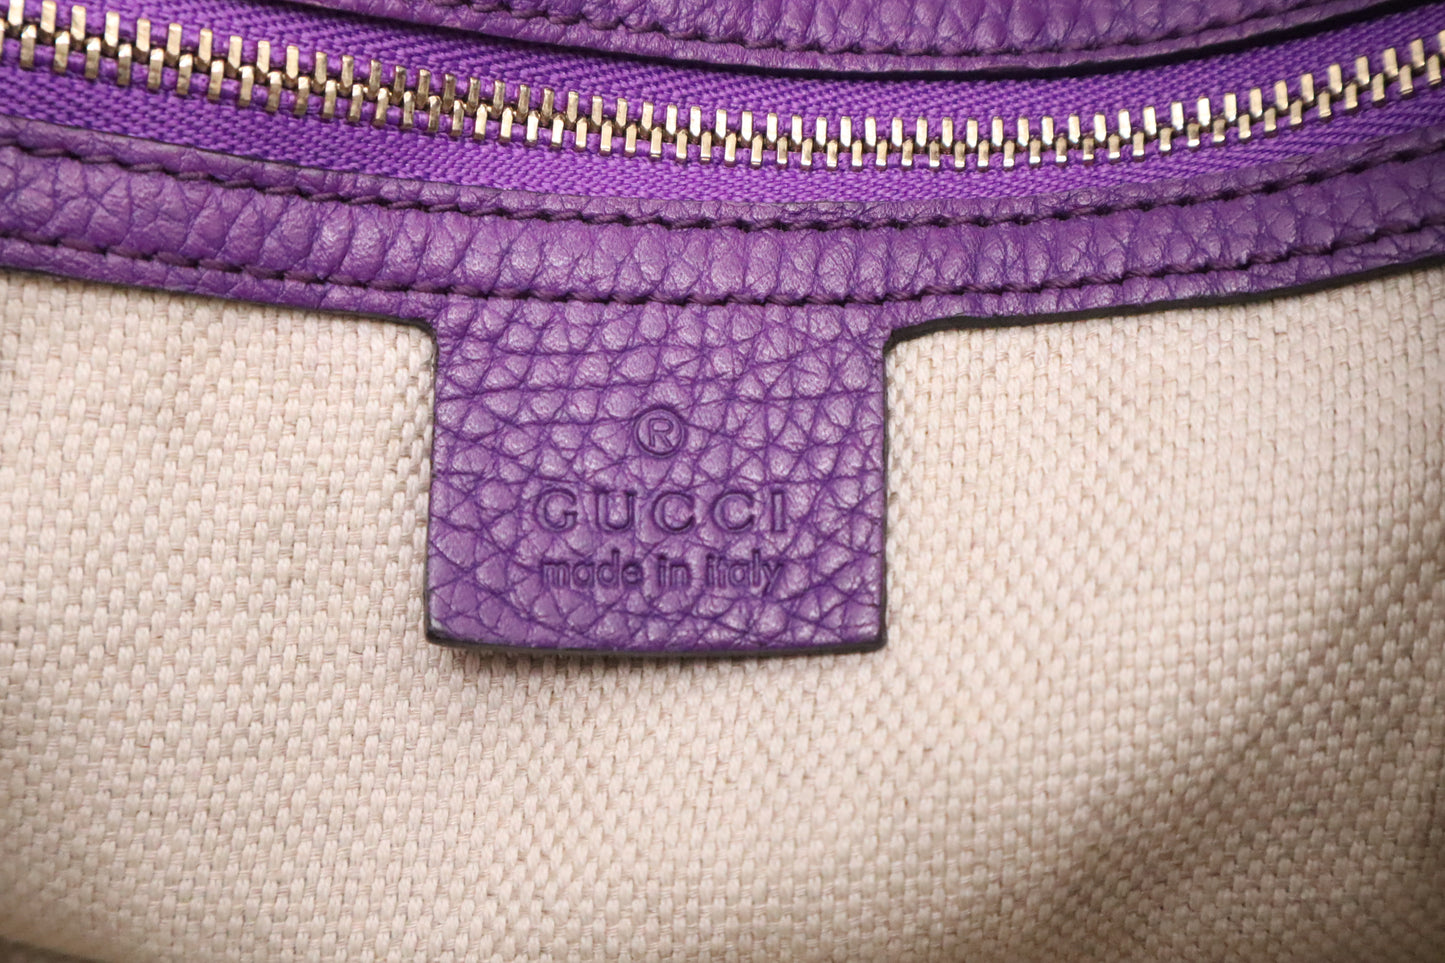 Gucci Soho Tote in Purple Leather